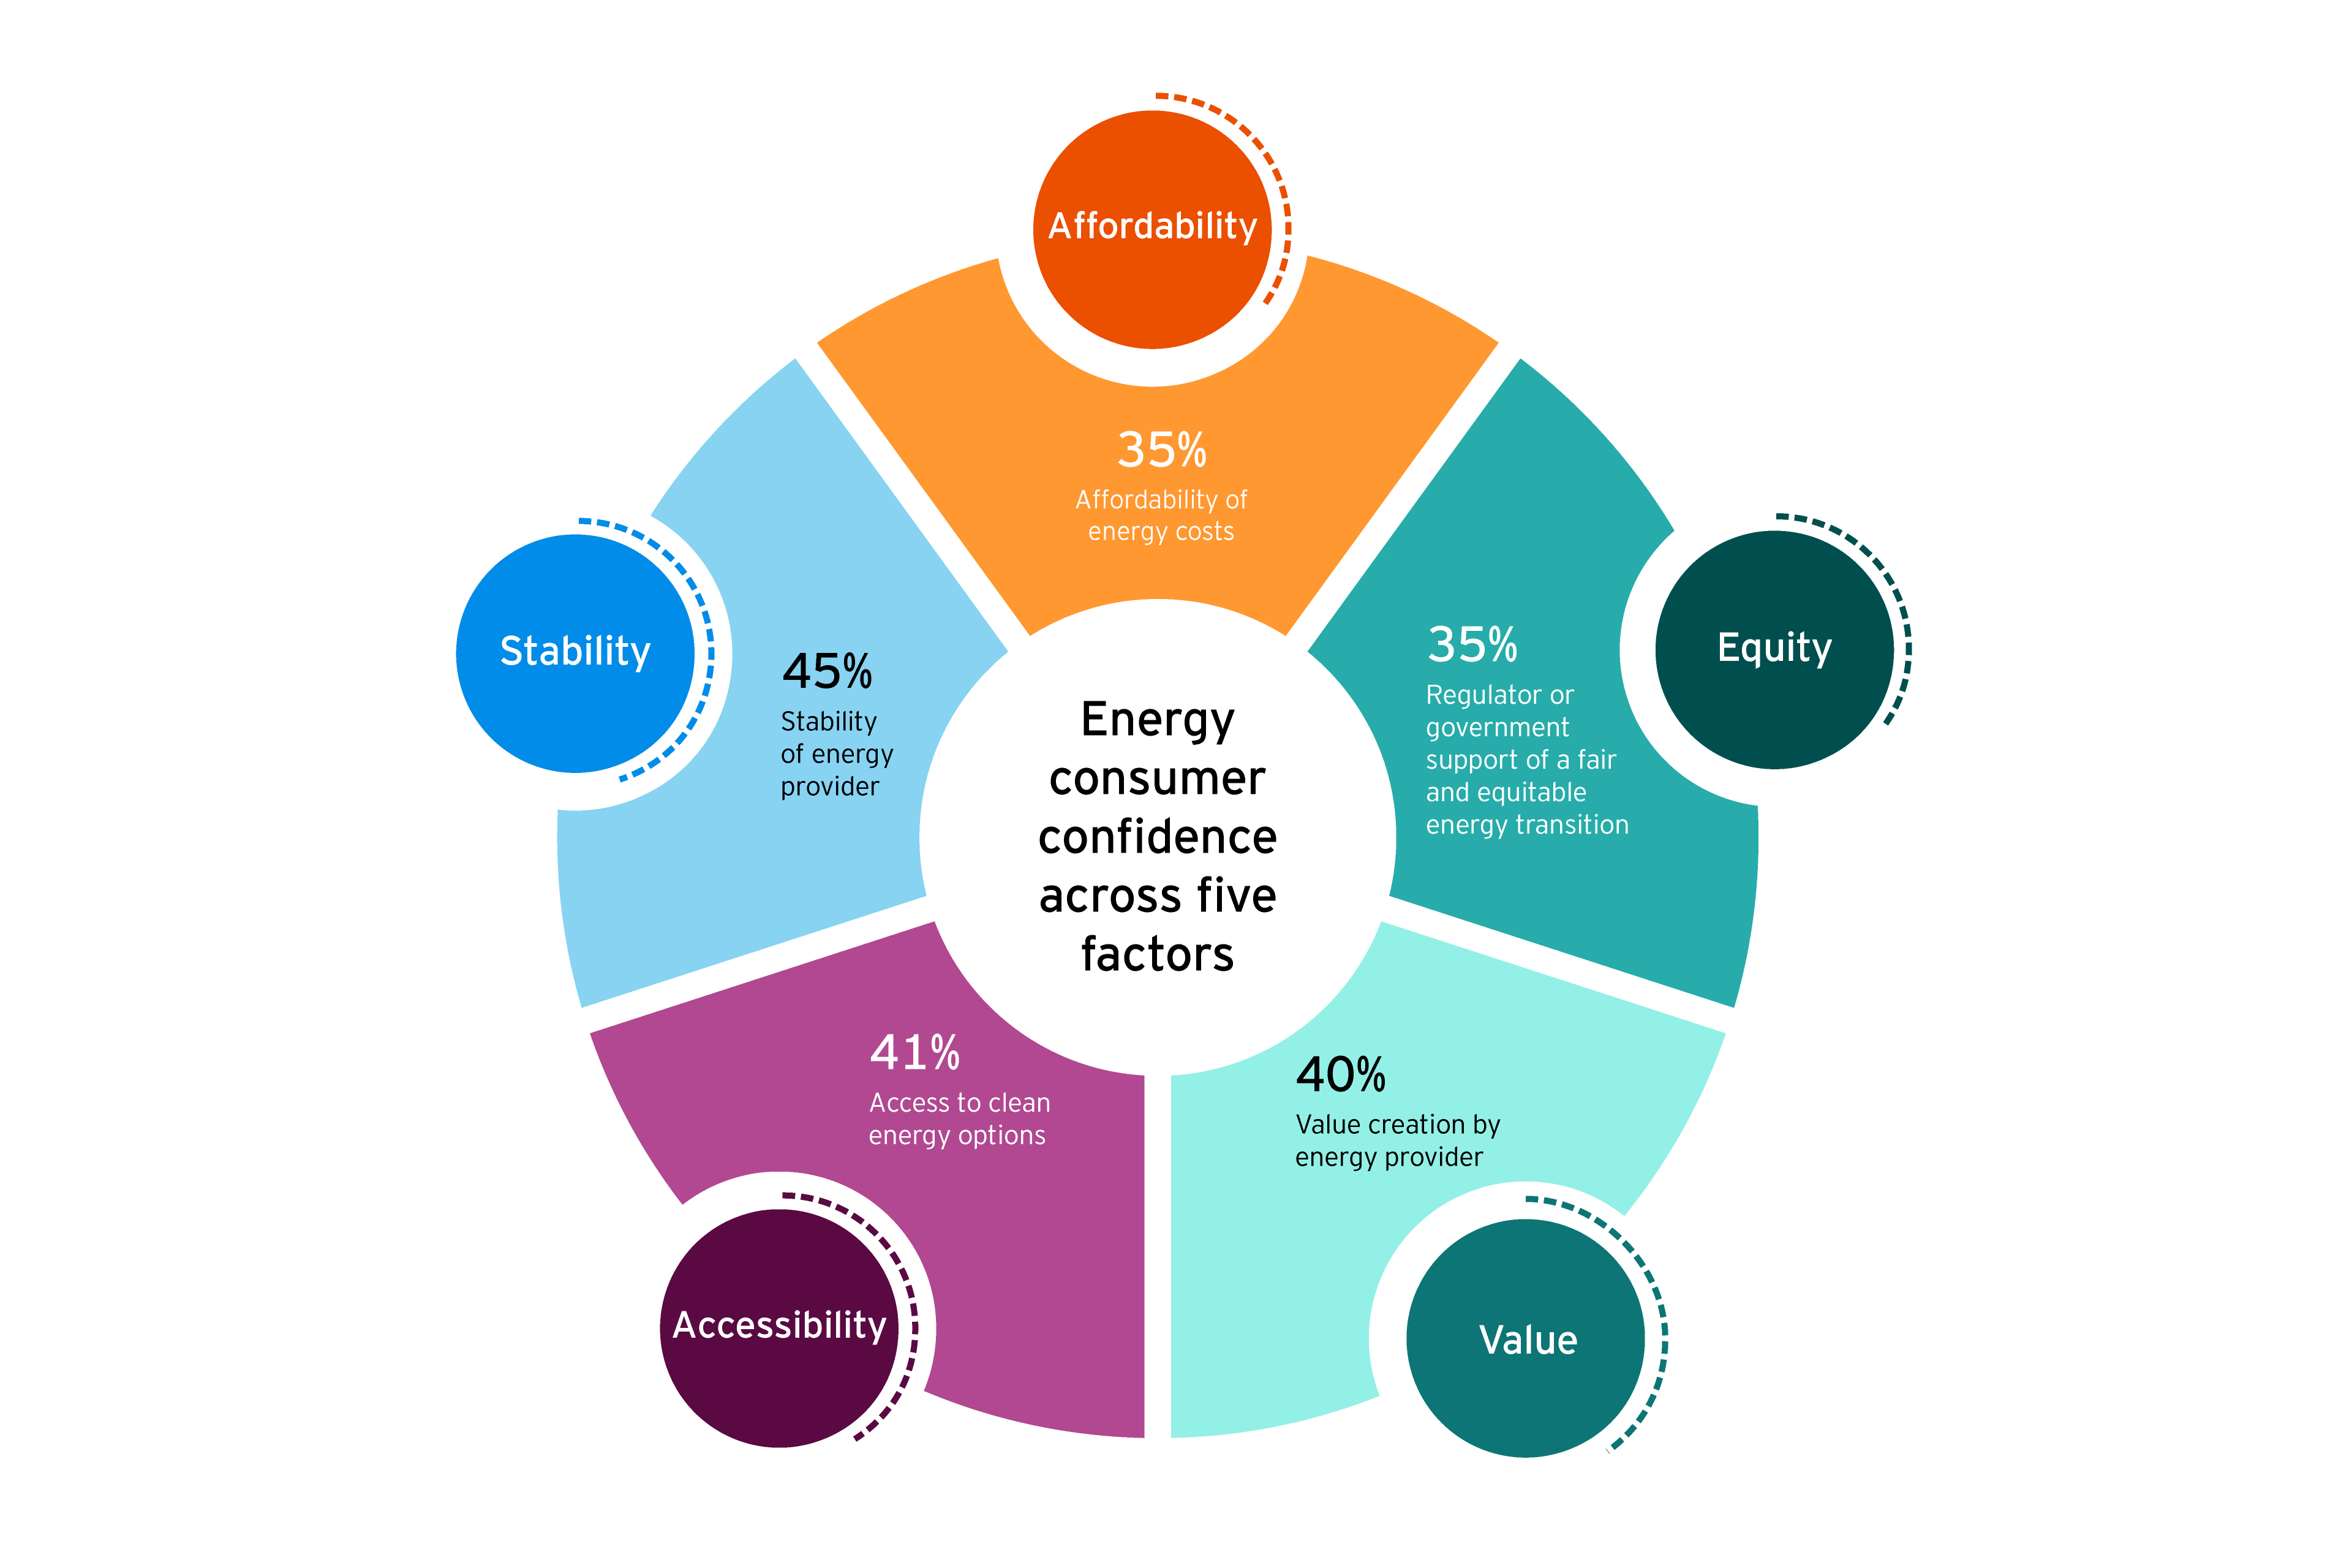 Energy consumer confidence across five factors